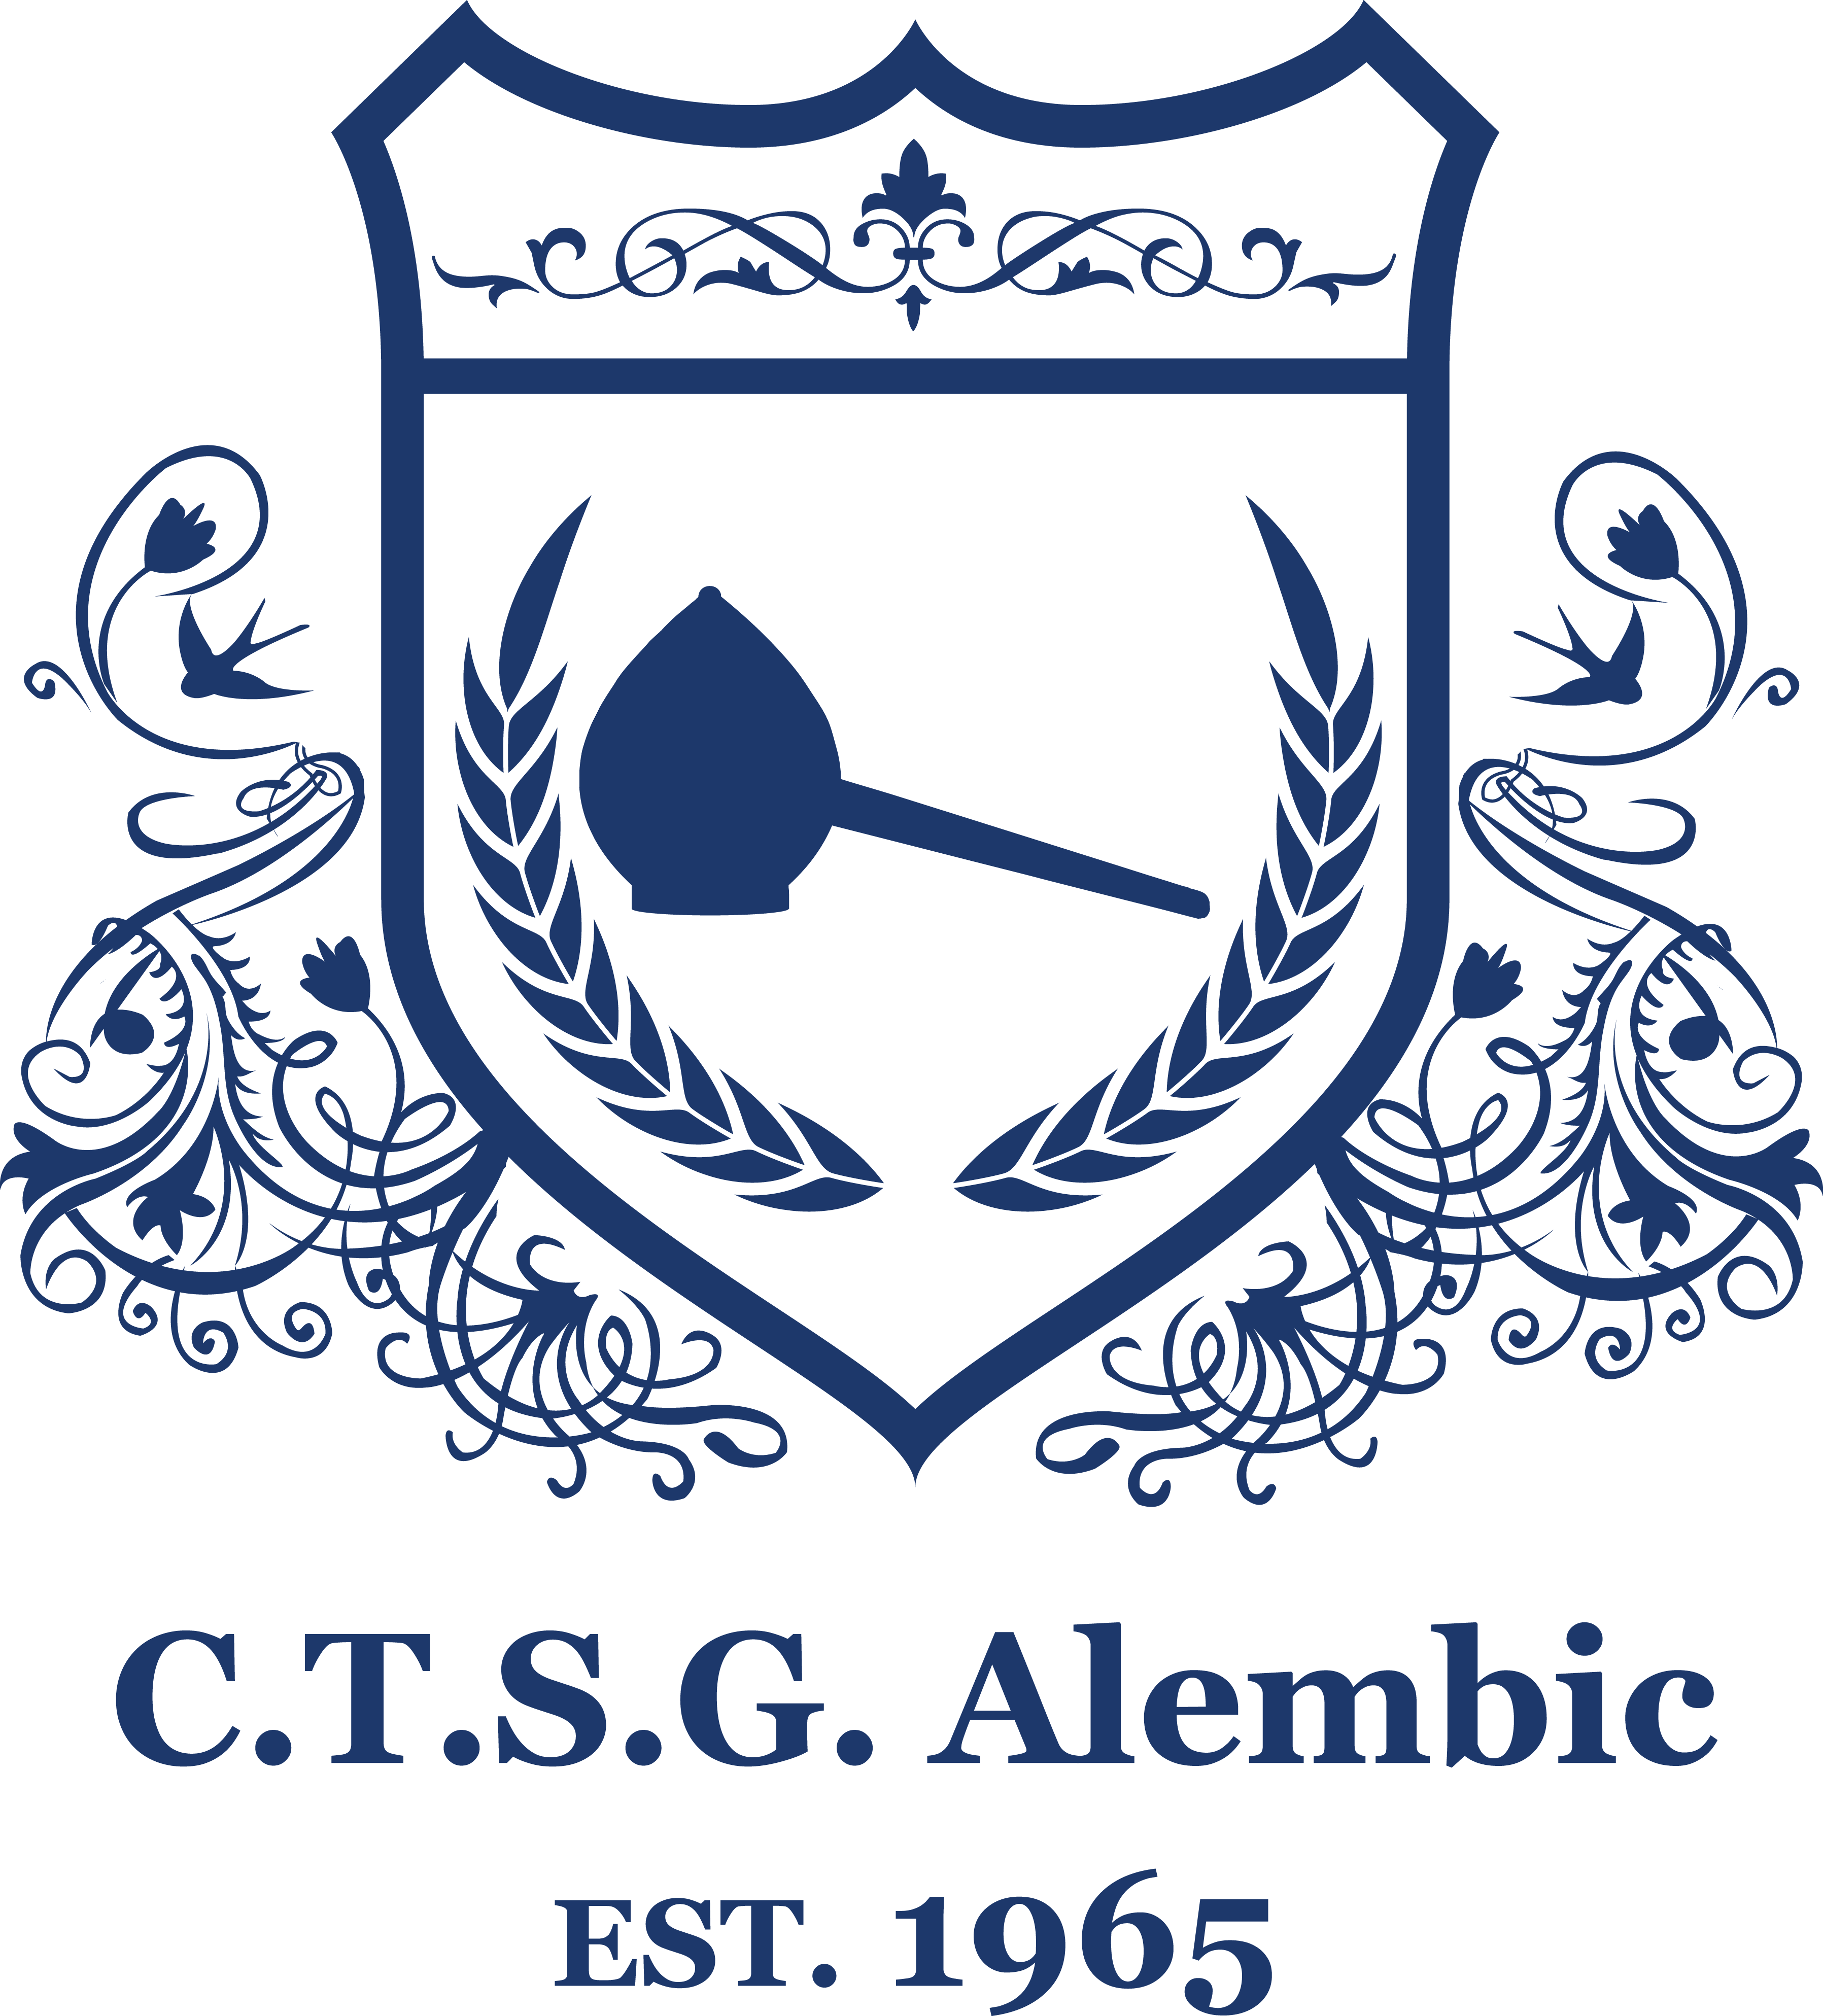 C.T.S.G. Alembic